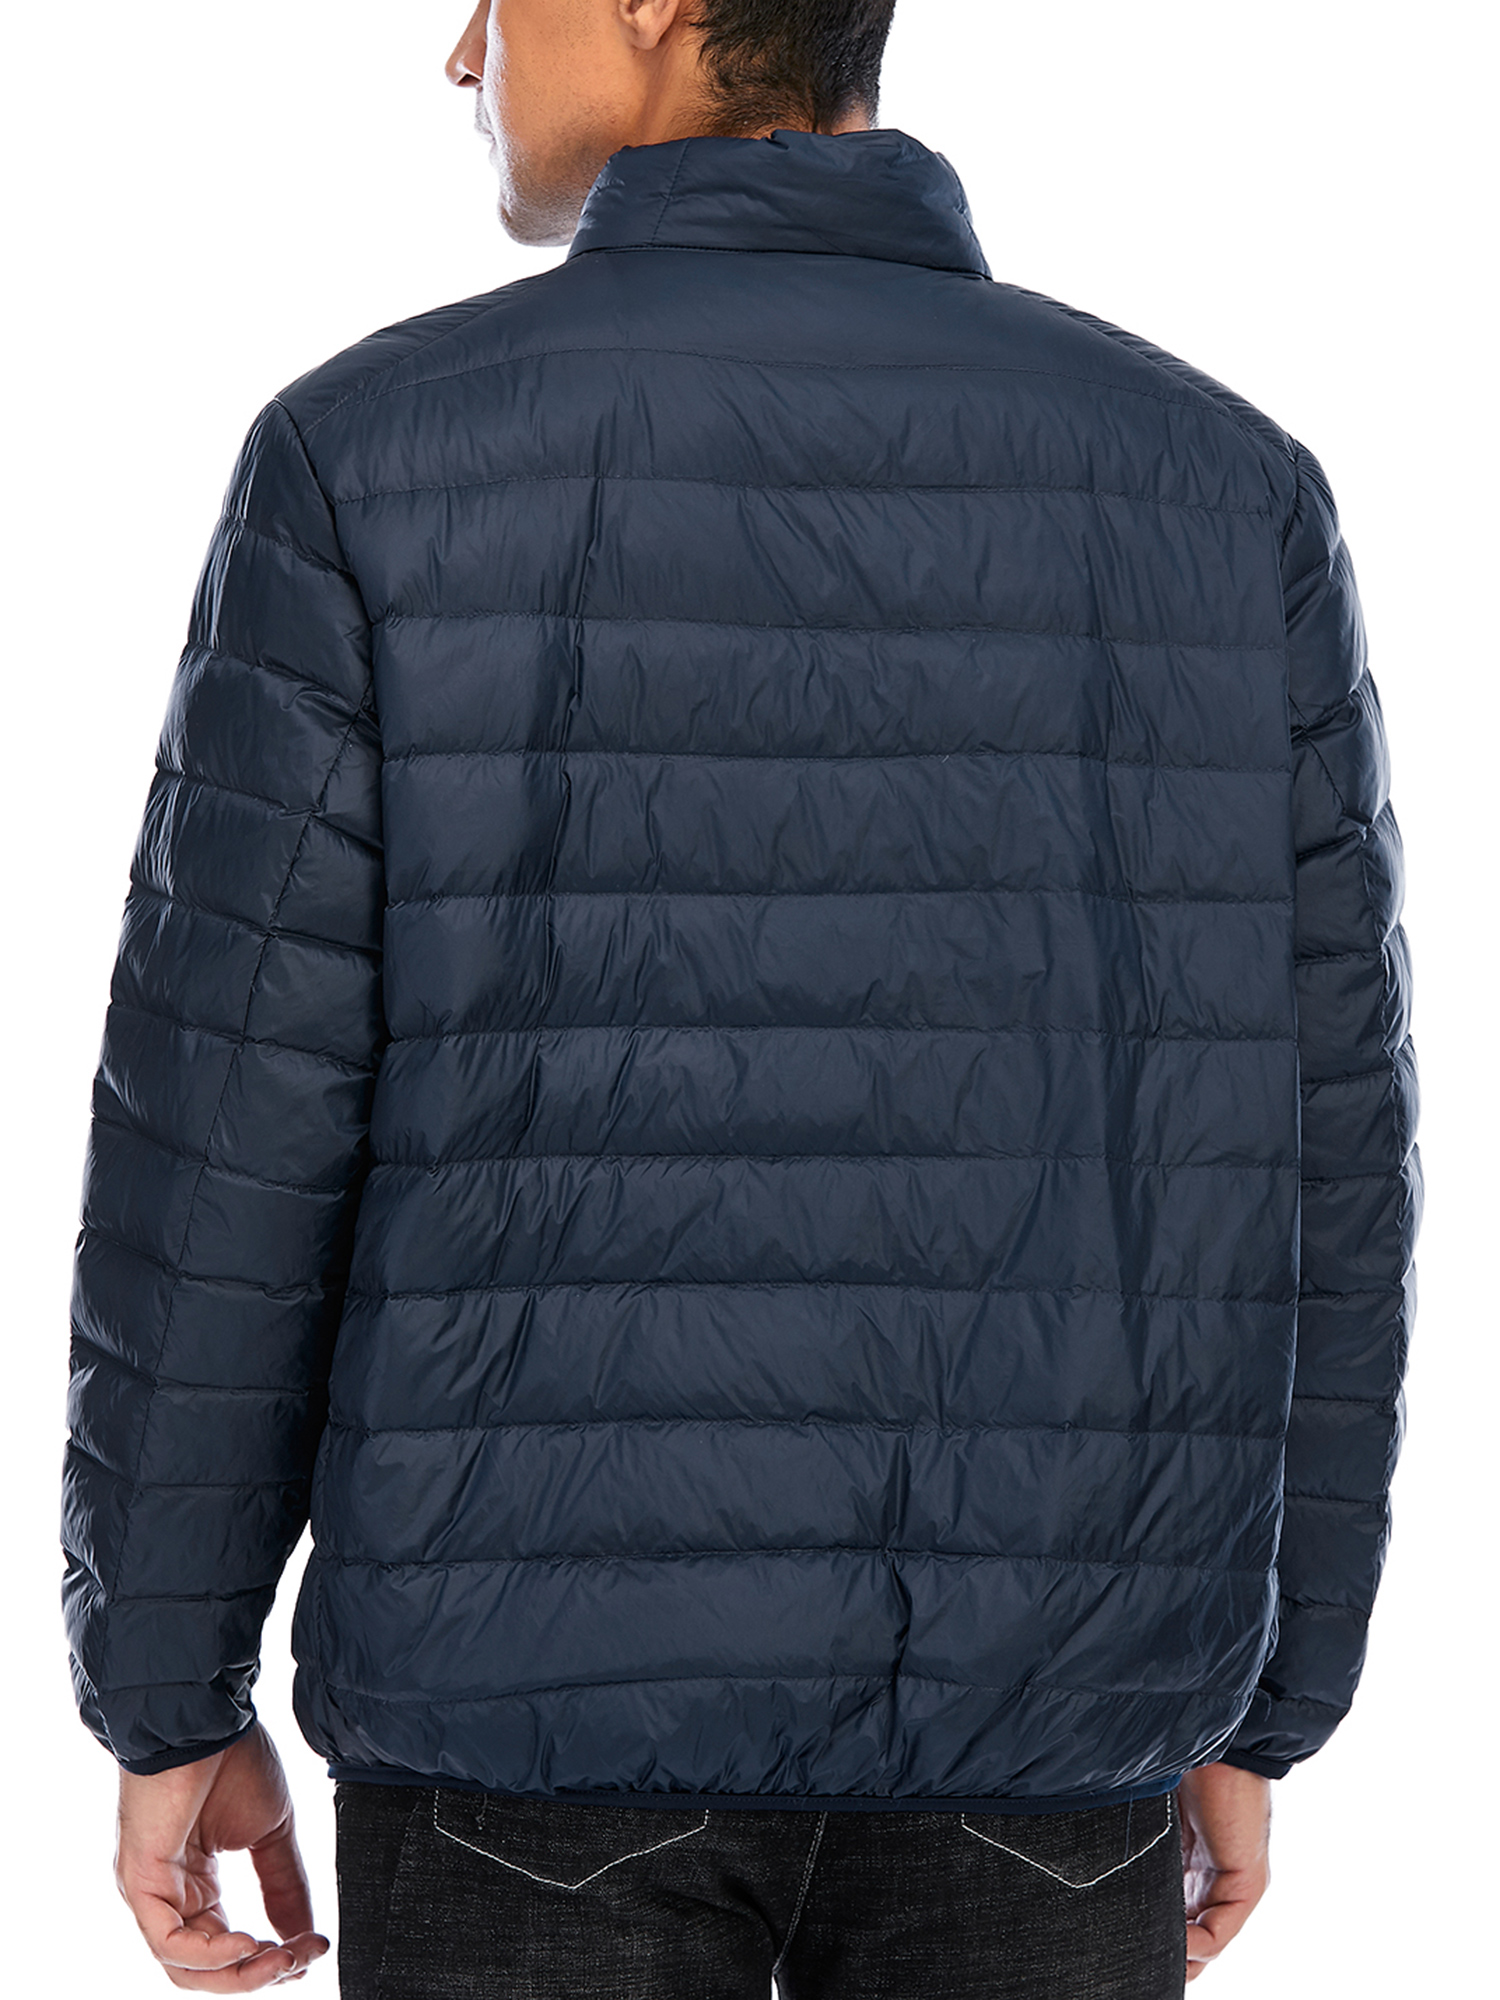 Men's Big & Tall Packable Zipper Puffer Down Jacket Lightweight Water Resistant Down Jacket Insulation Winter Warm Windproof Puffer Jacket - image 4 of 8